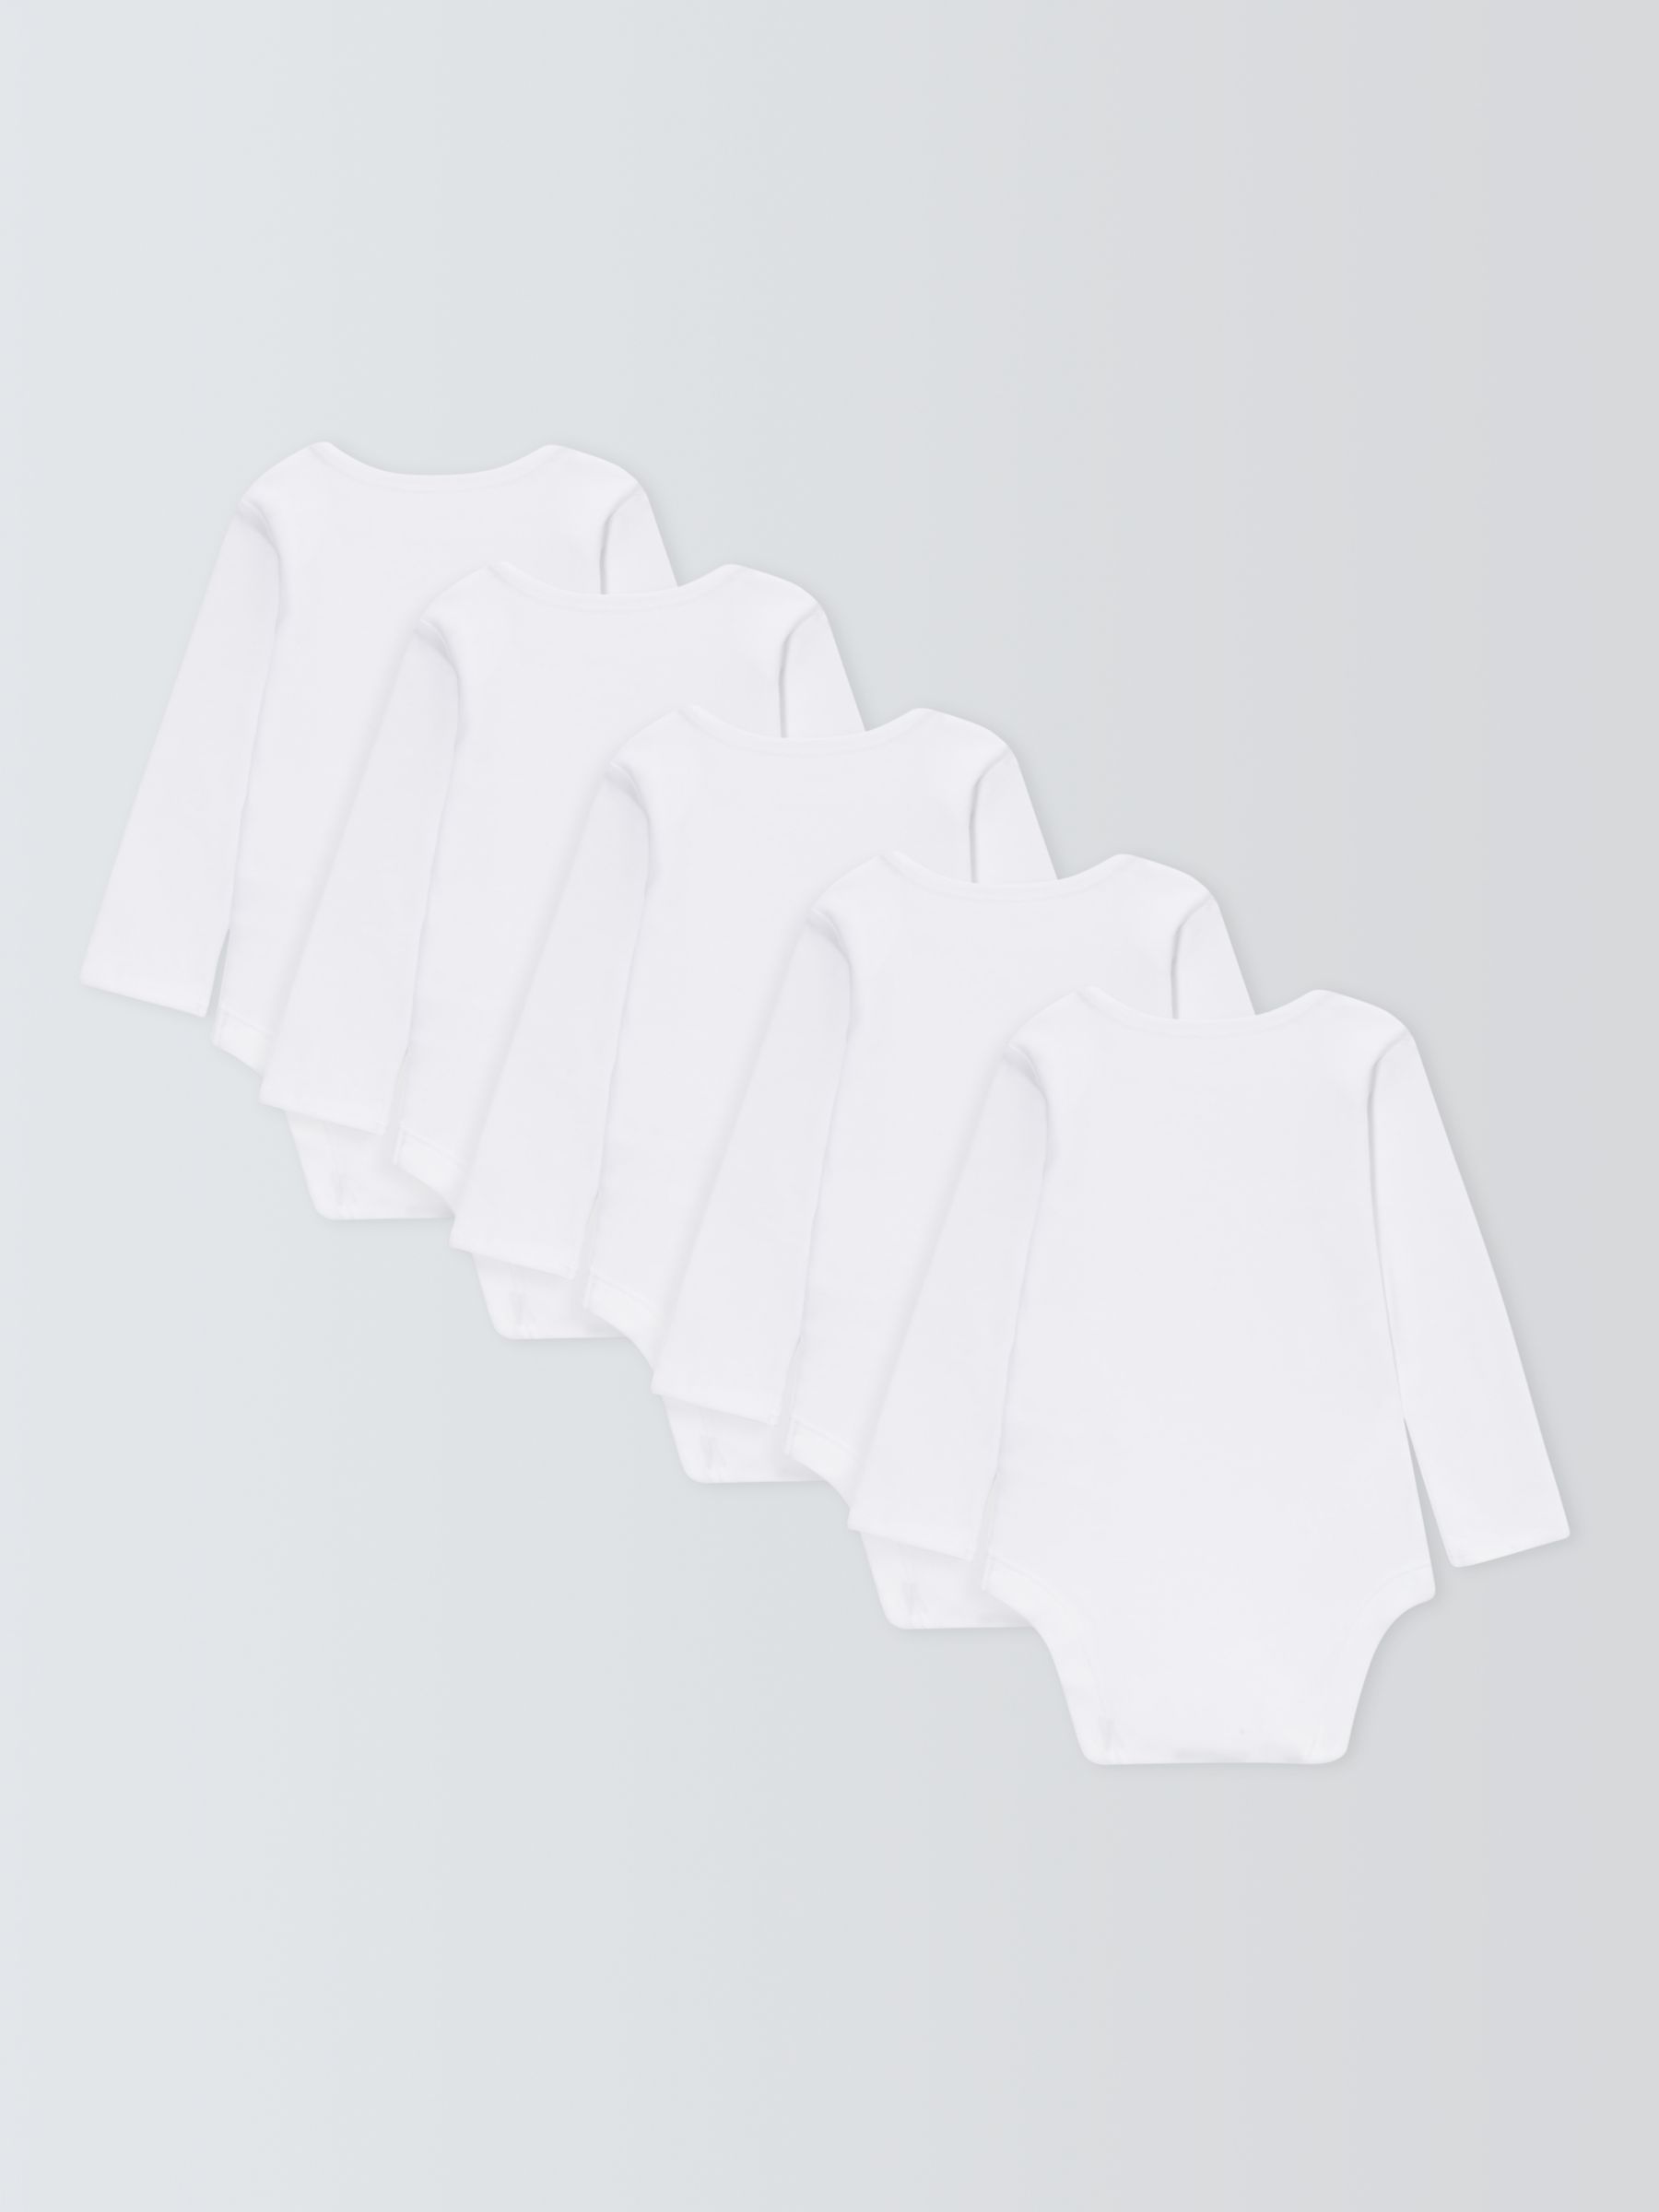 Buy John Lewis Baby Long Sleeve GOTS Organic Cotton Bodysuit, Pack of 5, White Online at johnlewis.com